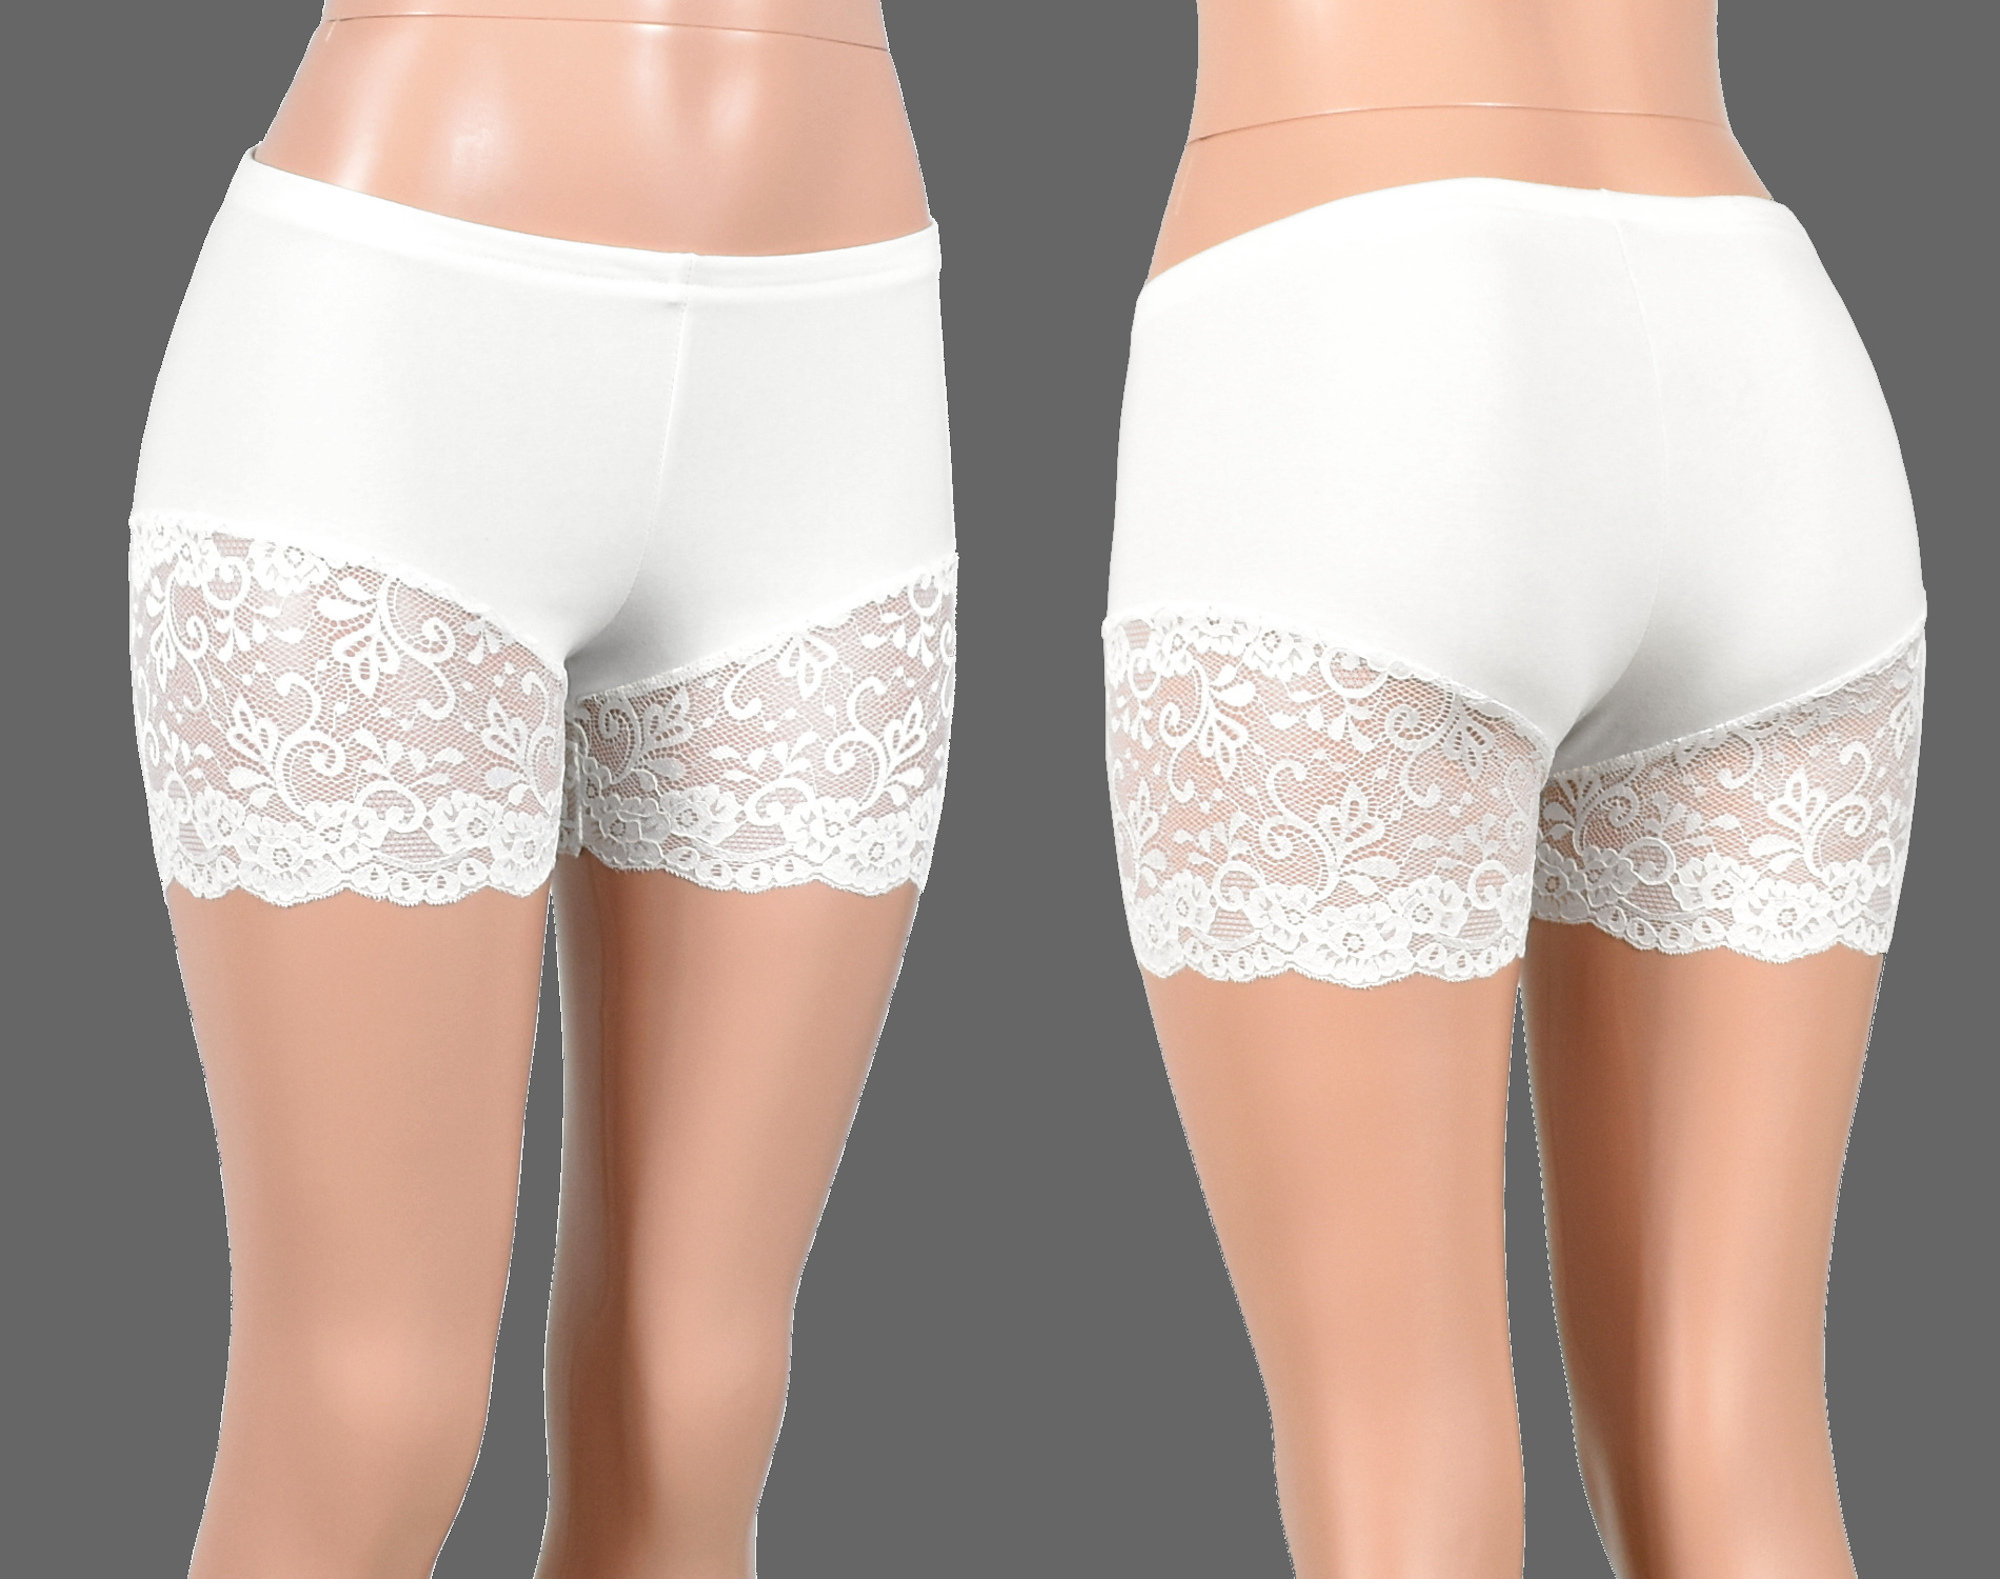 Vassarette Women's Invisibly Smooth Slip Short Panty 12385, White